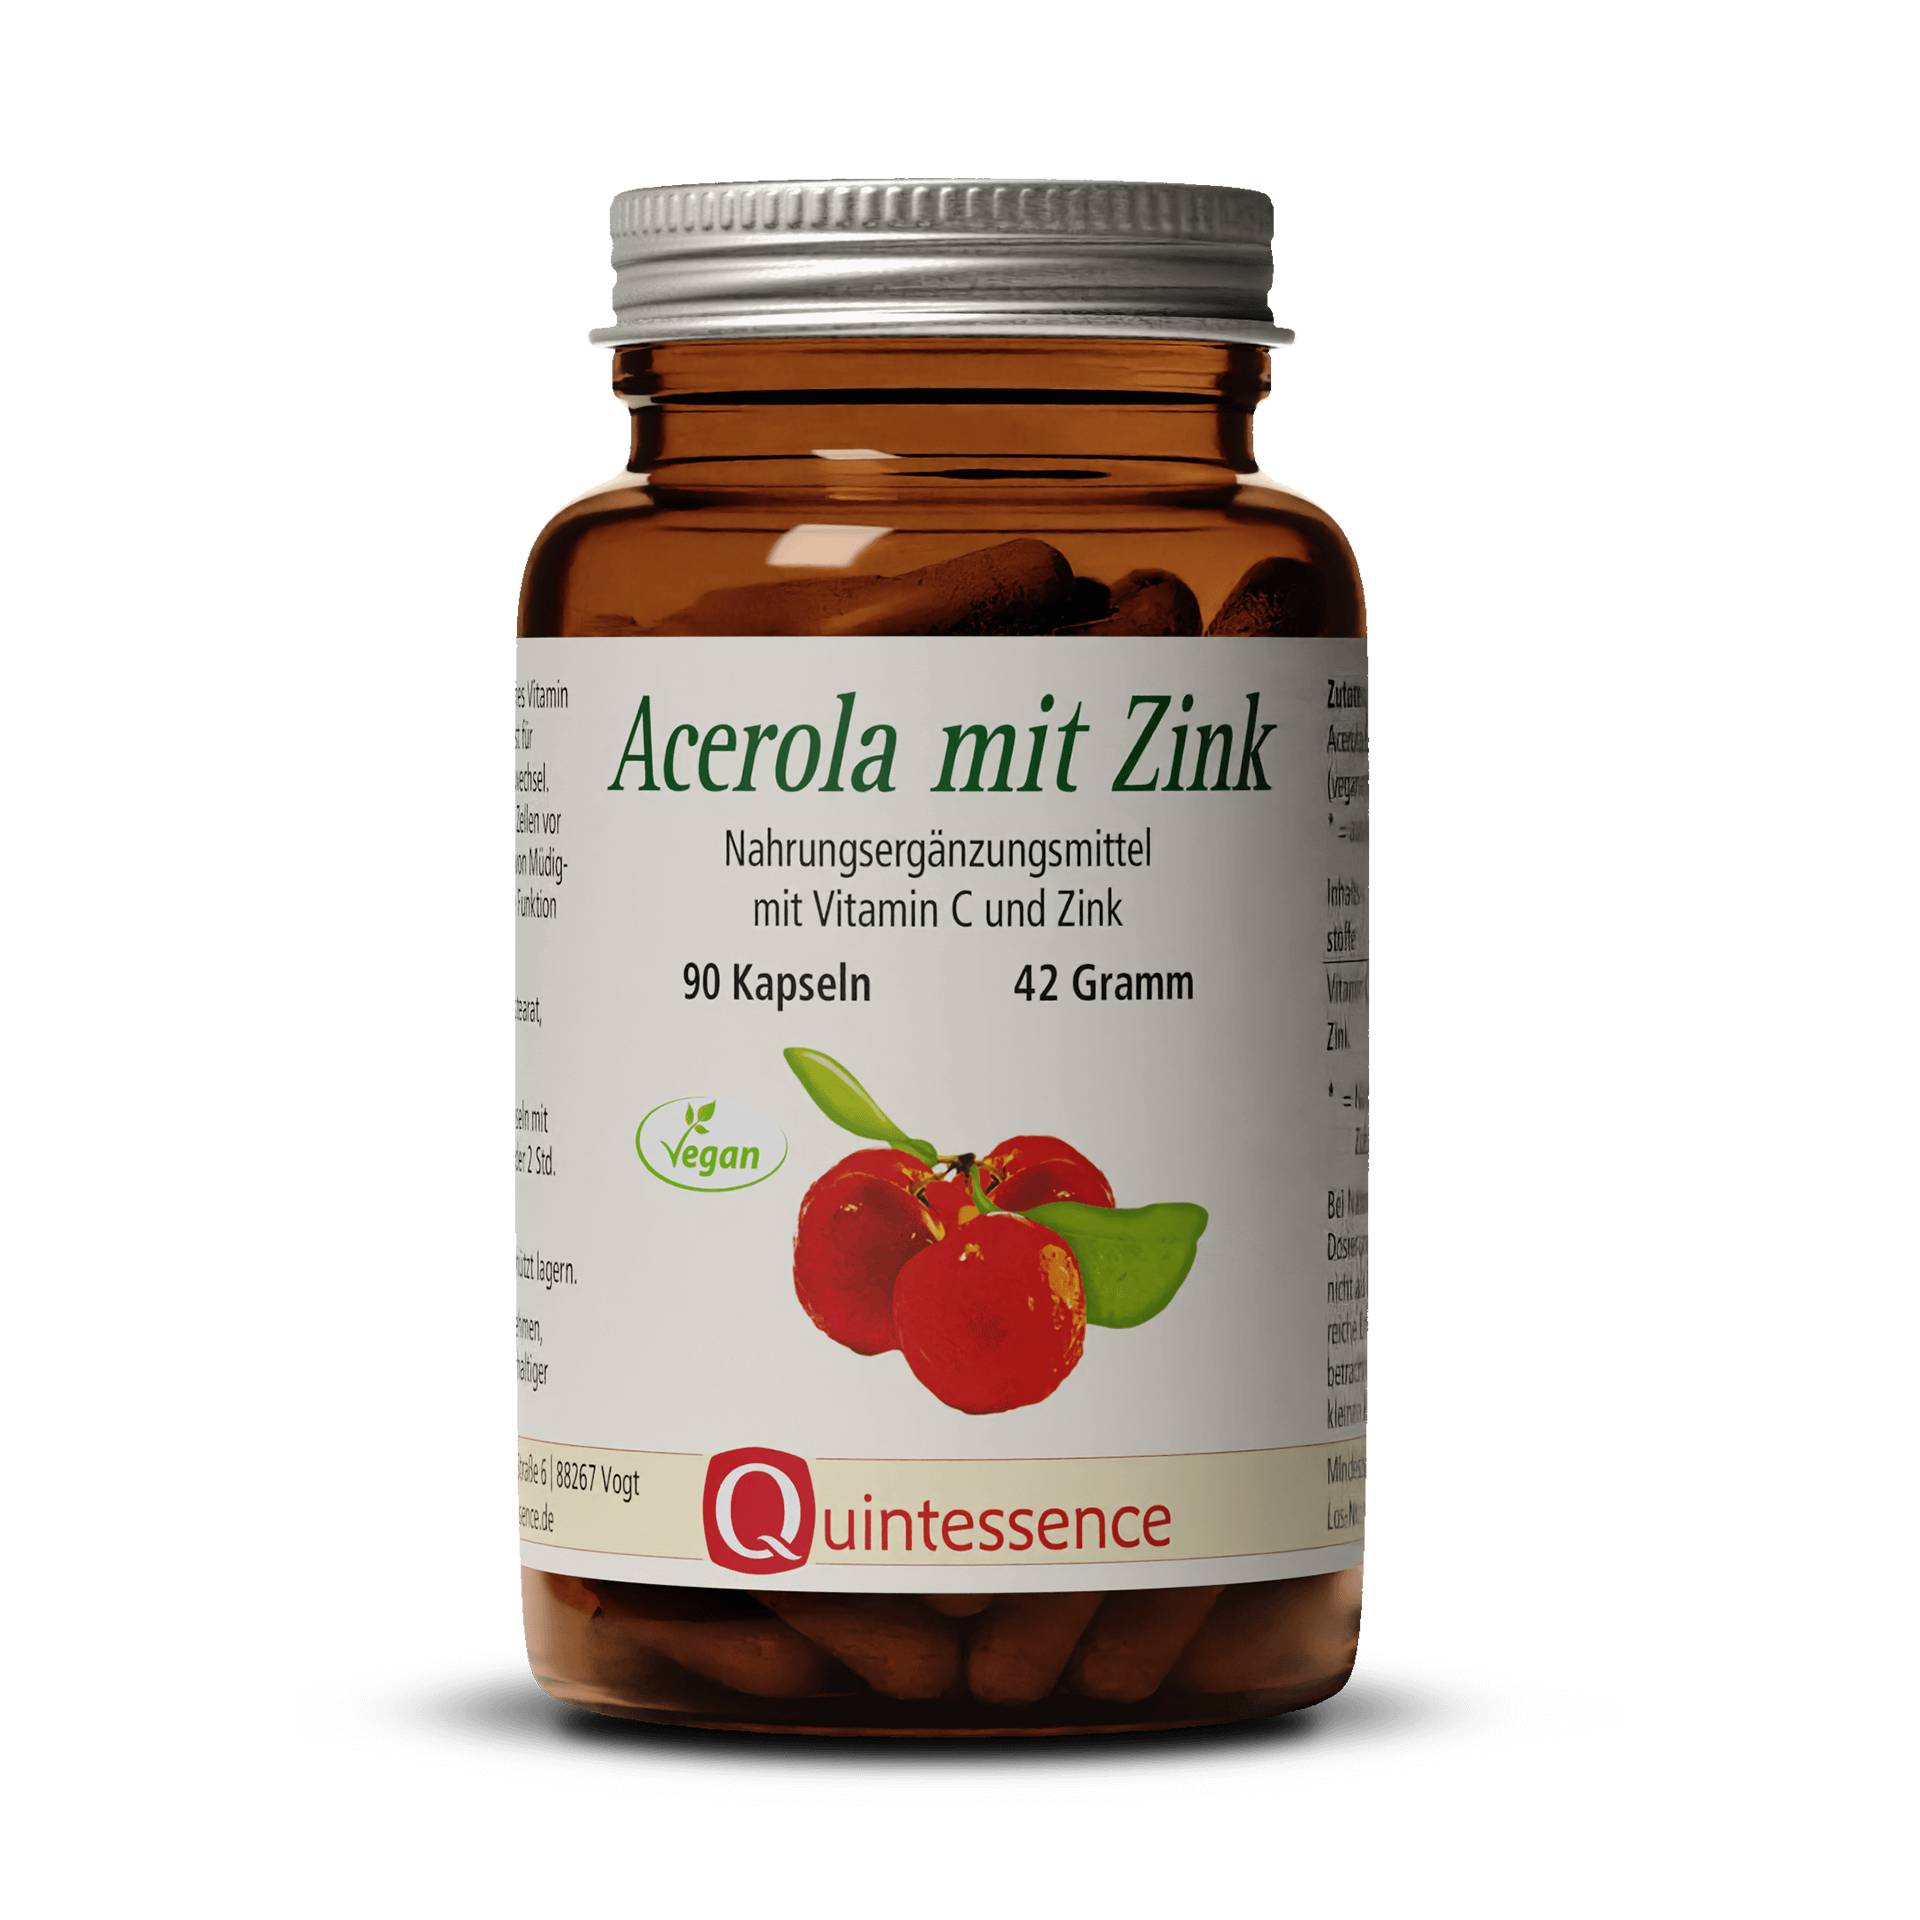 Acerola + Zink 90 Kapseln - 1 Kapsel deckt 75 Prozent des Tagesbedarfs an Vitamin C und Zink - Vegan - Quintessence von Quintessence